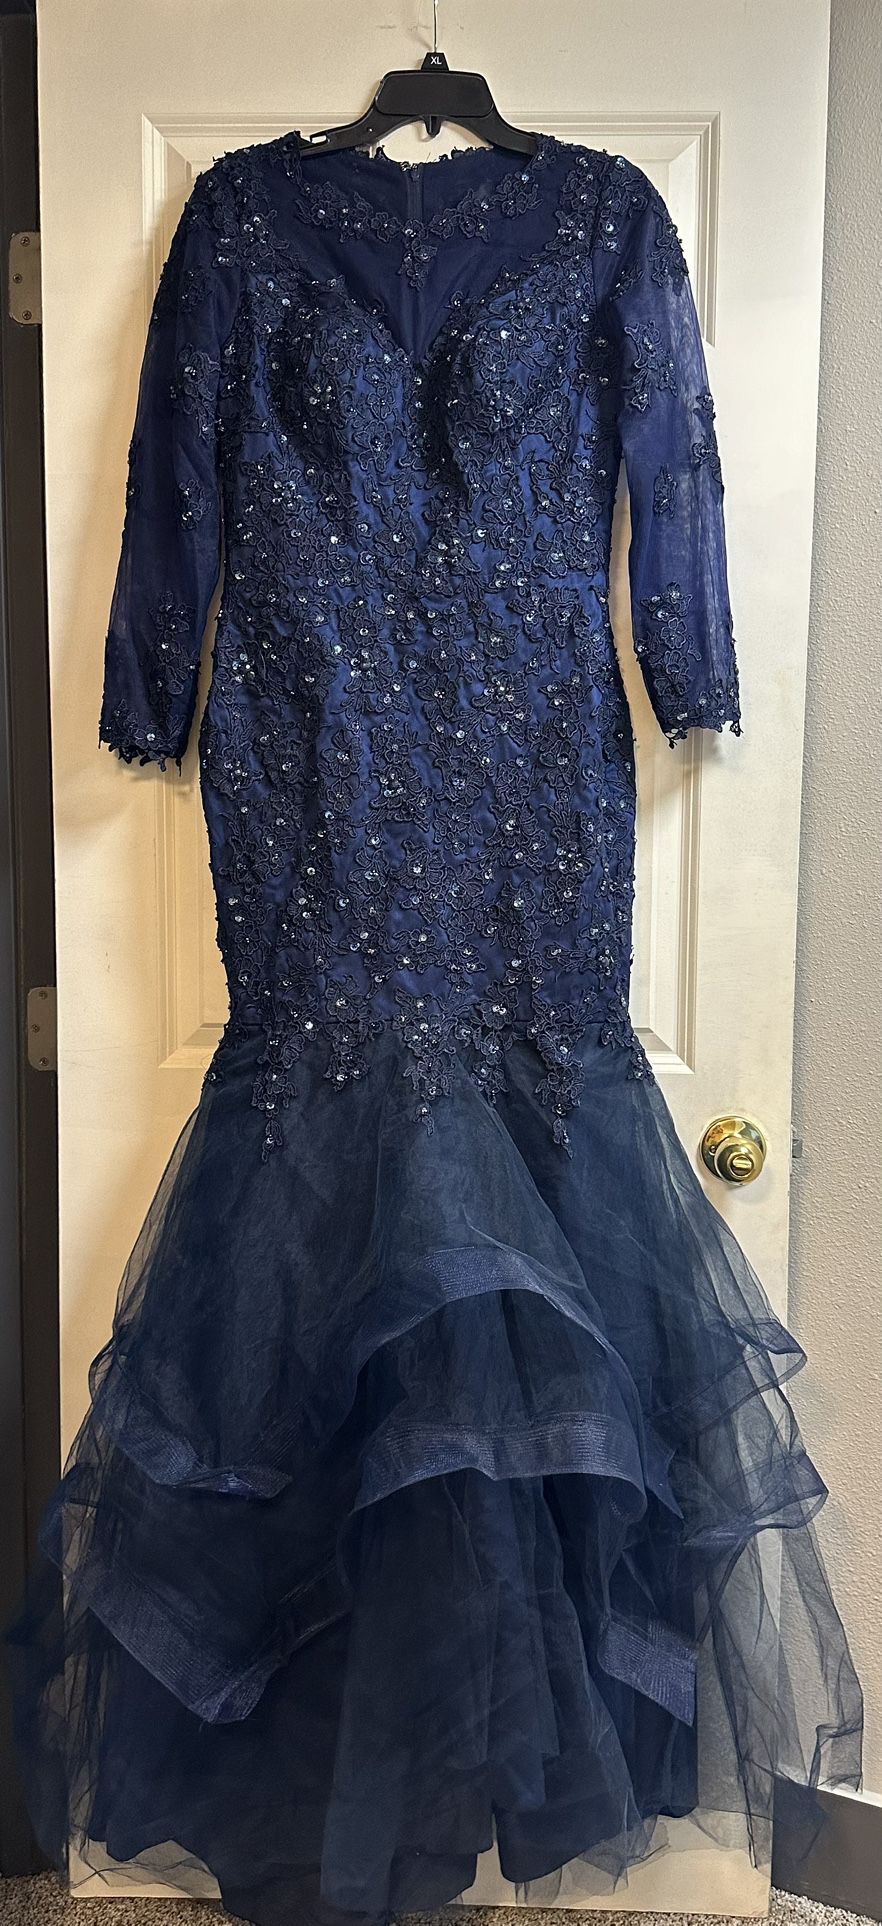 Prom Dress Size M